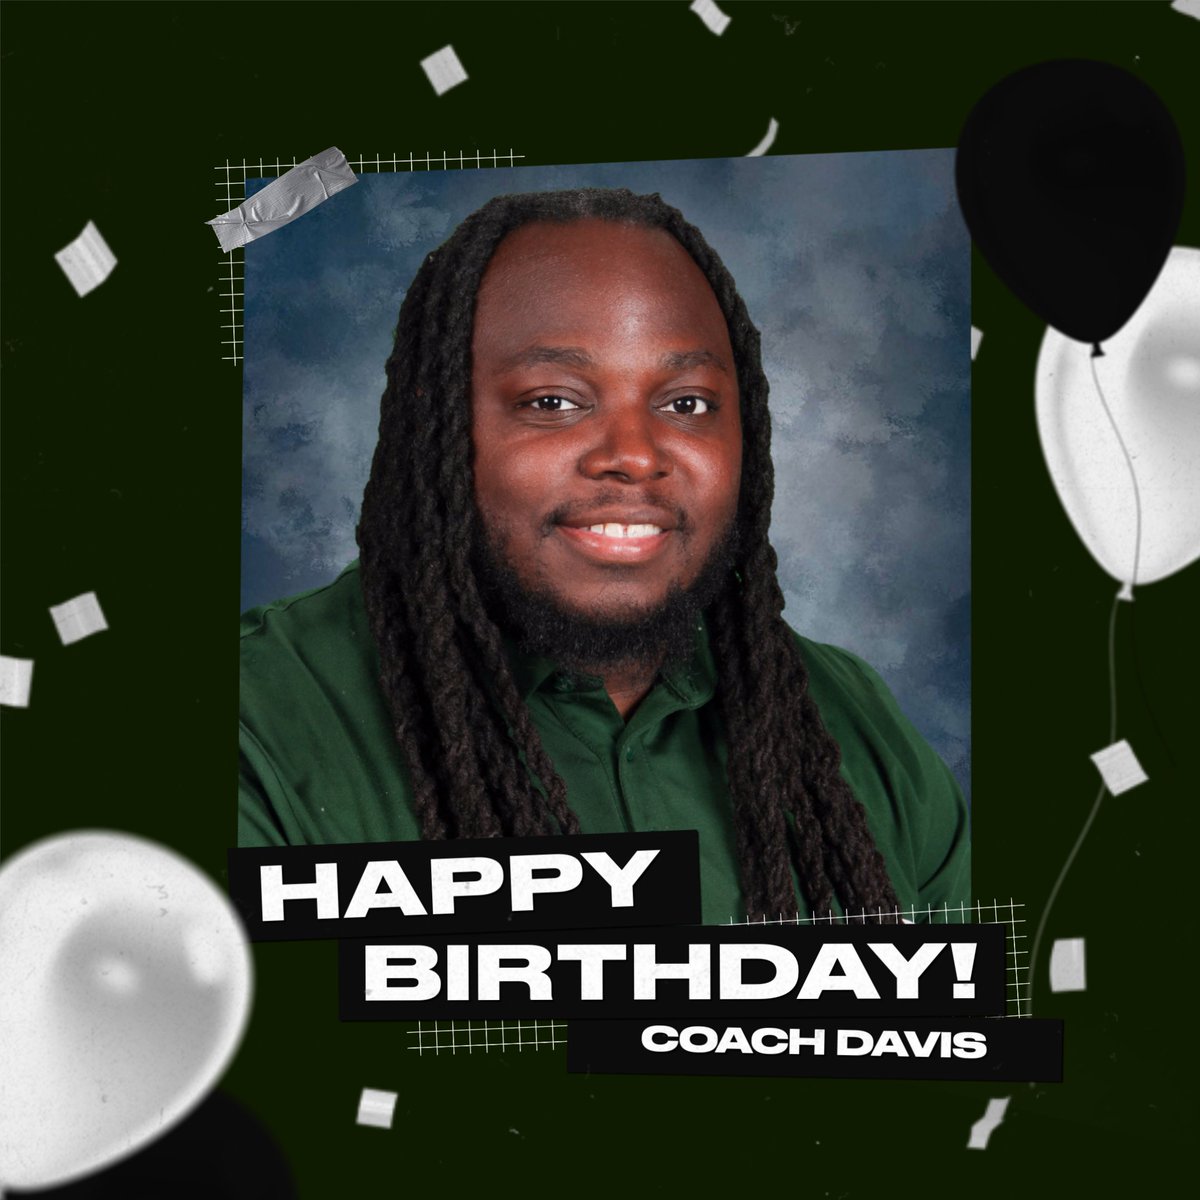 Happy Birthday Coach Davis, we hope you have a great day! @LakeRidgeFB